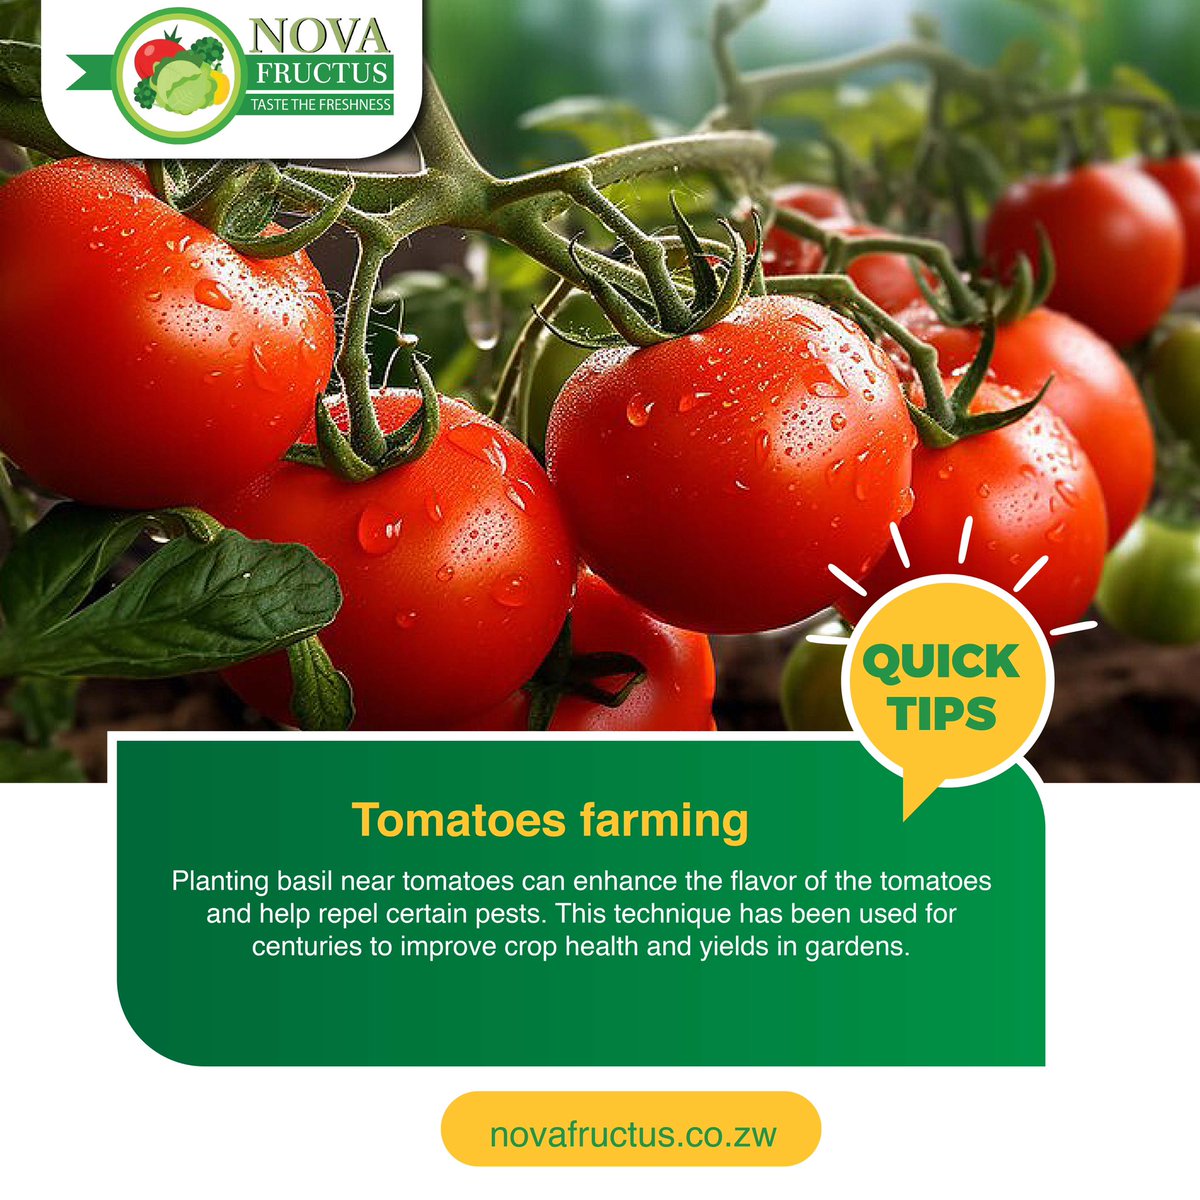 Tomato farming tips 💡
#farmingtips #tomatofarmingtips #novafructusfarming #farmingtips #farminglife #farmingadvice #farmmanagement #agriculture #farming #mwanwevhu #zimfarmers